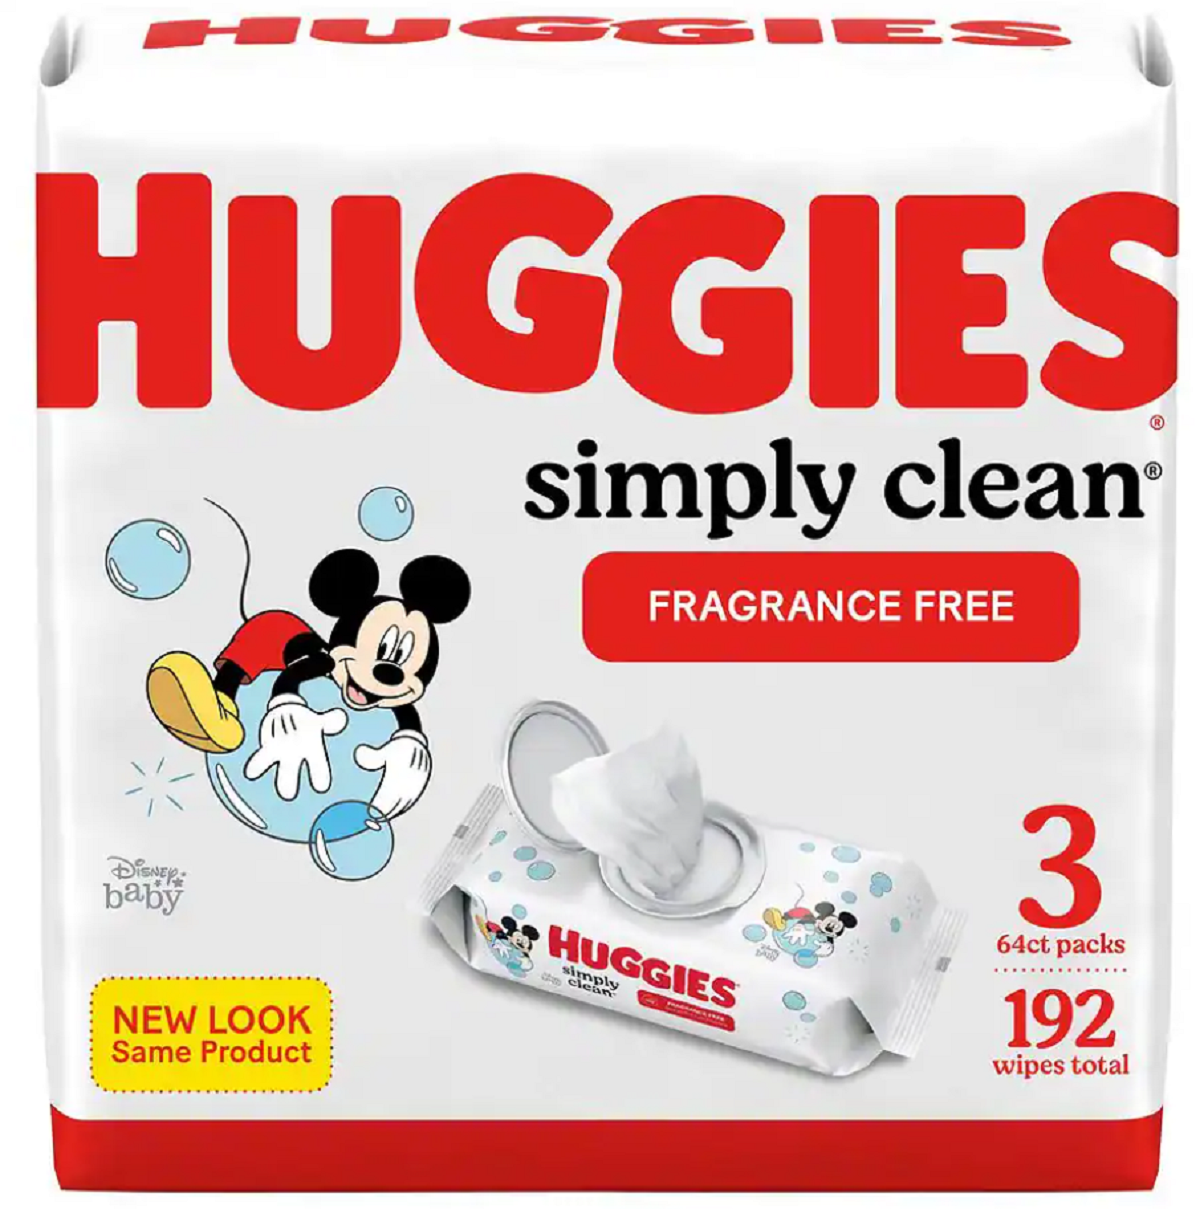 Buy 2 Huggies Baby Wipes & Save $3 with myWalgreens